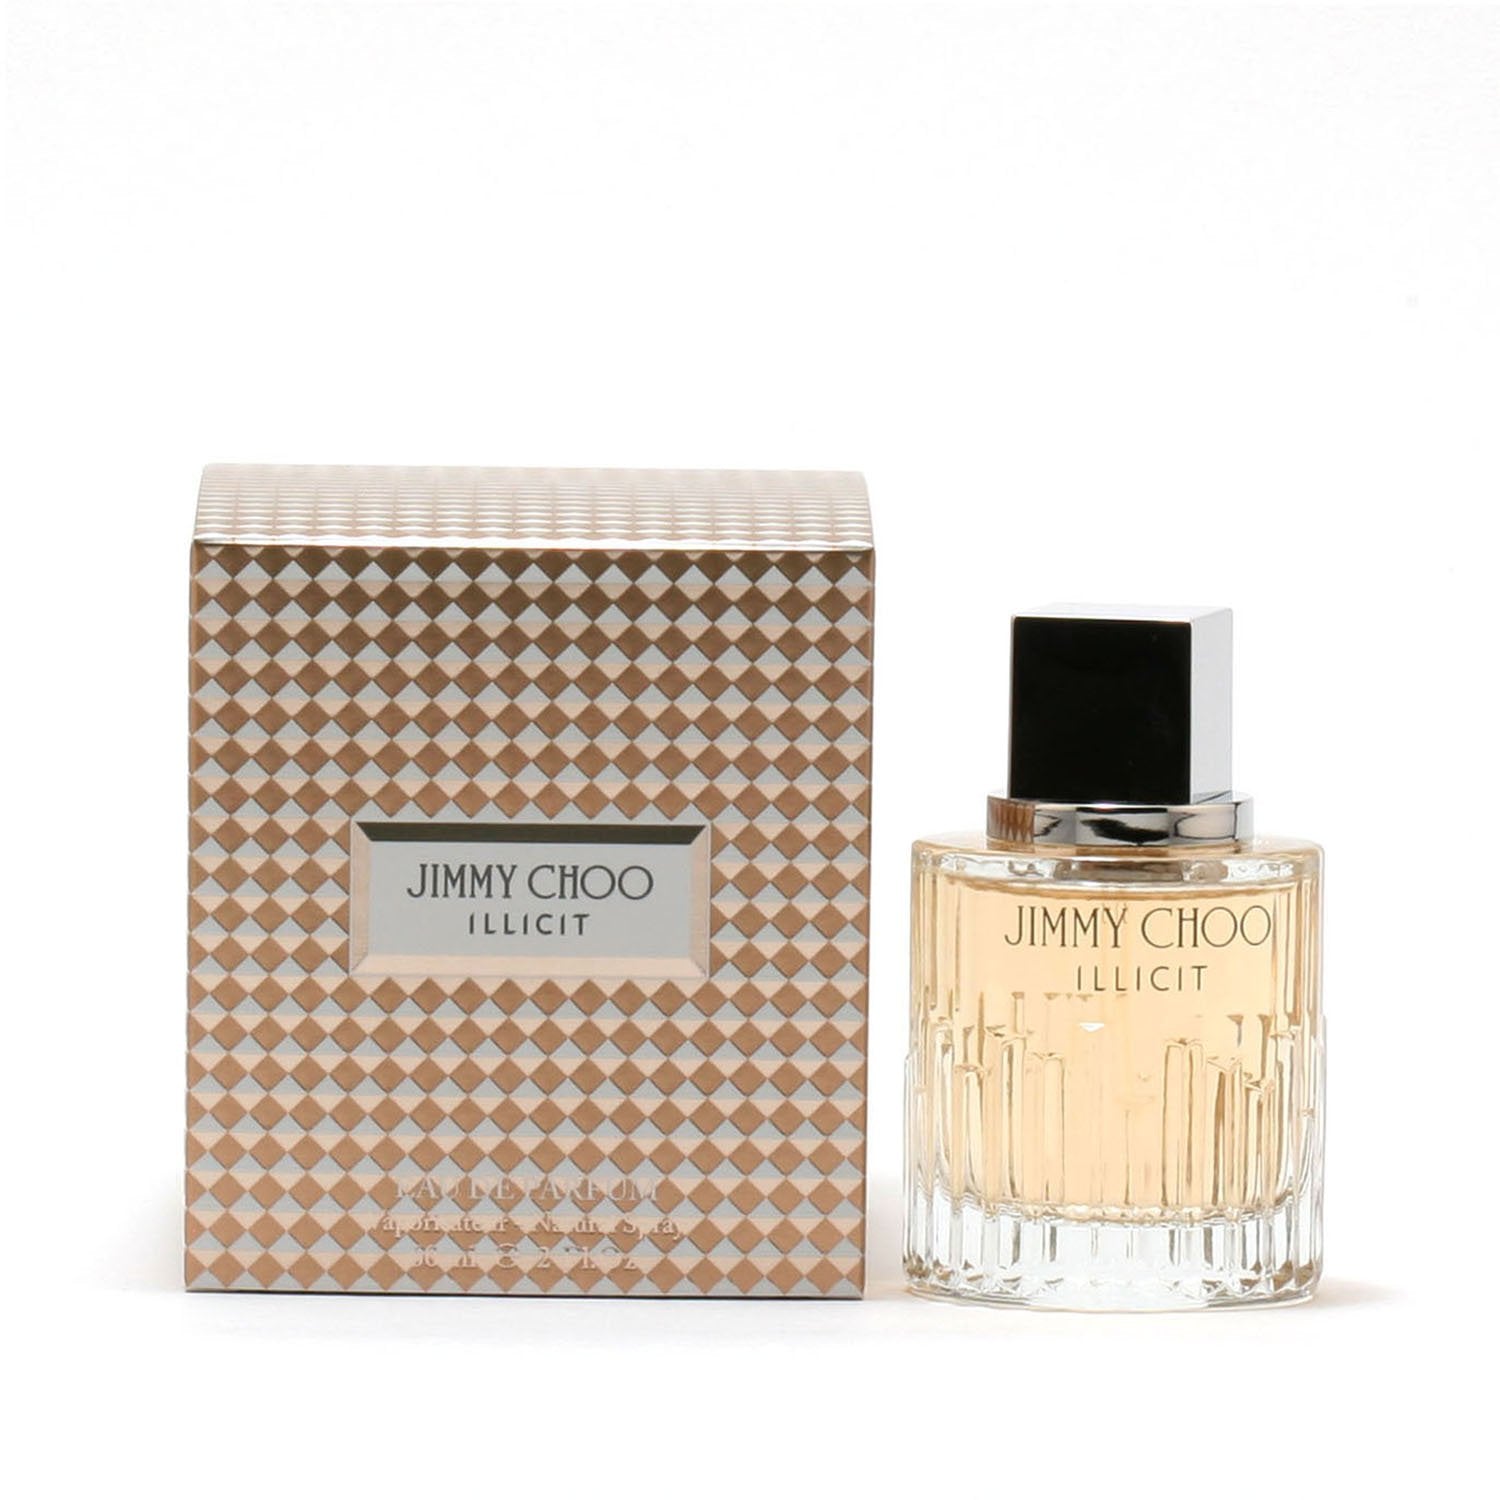 Perfume - JIMMY CHOO ILLICIT FOR WOMEN - EAU DE PARFUM SPRAY